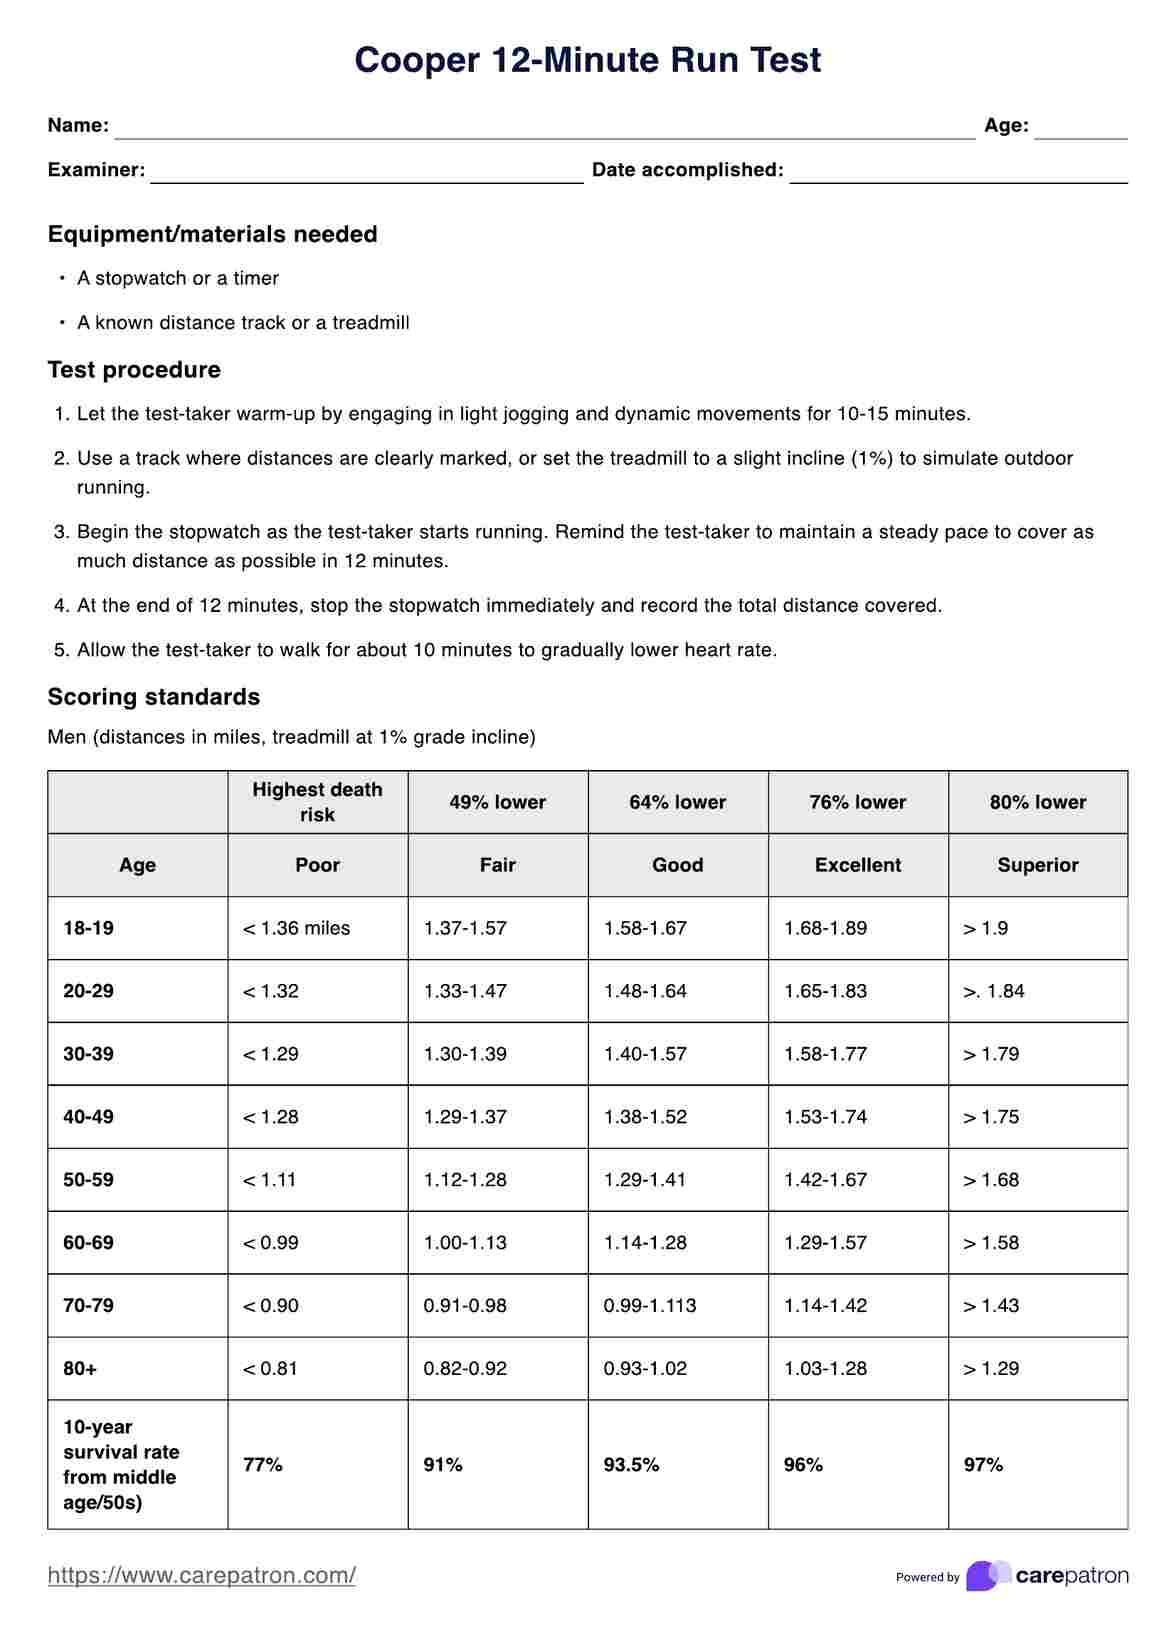 Cooper 12 Minute Run Test PDF Example